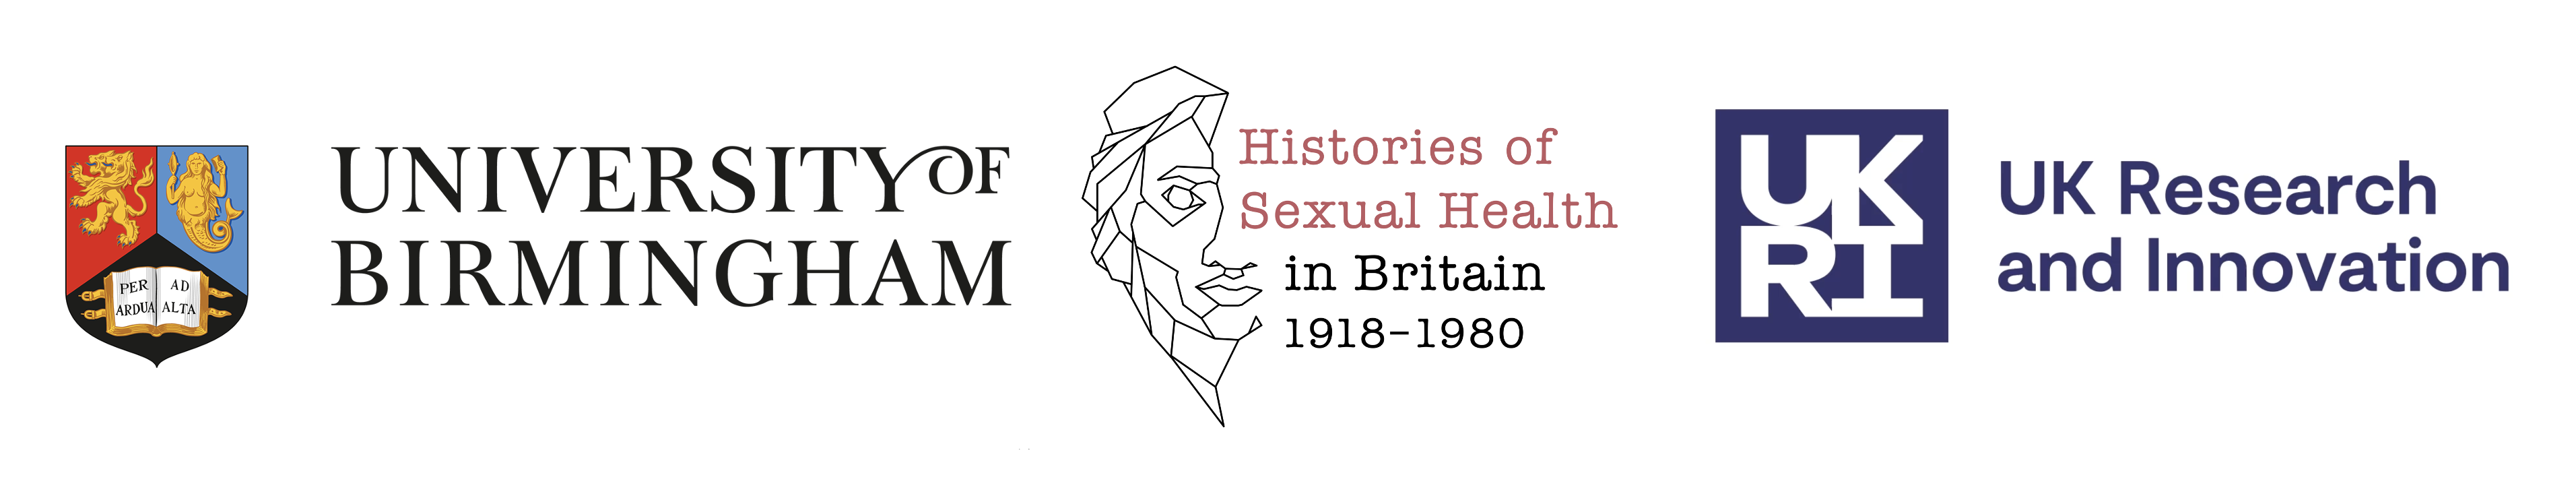 University of Birmingham, Histories of Sexual Health and UKRI logos